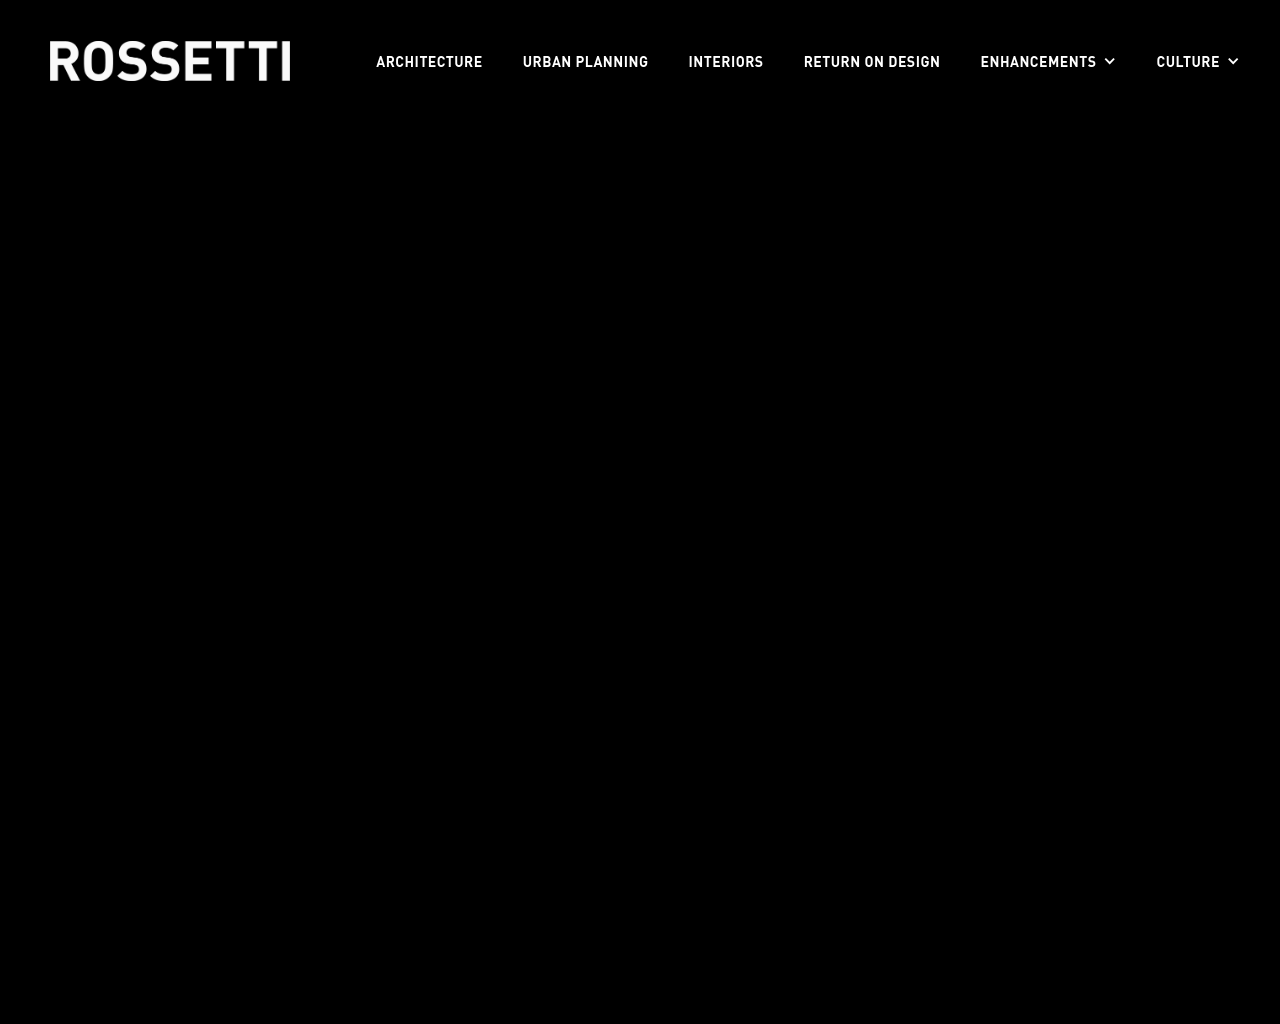 rossetti.com